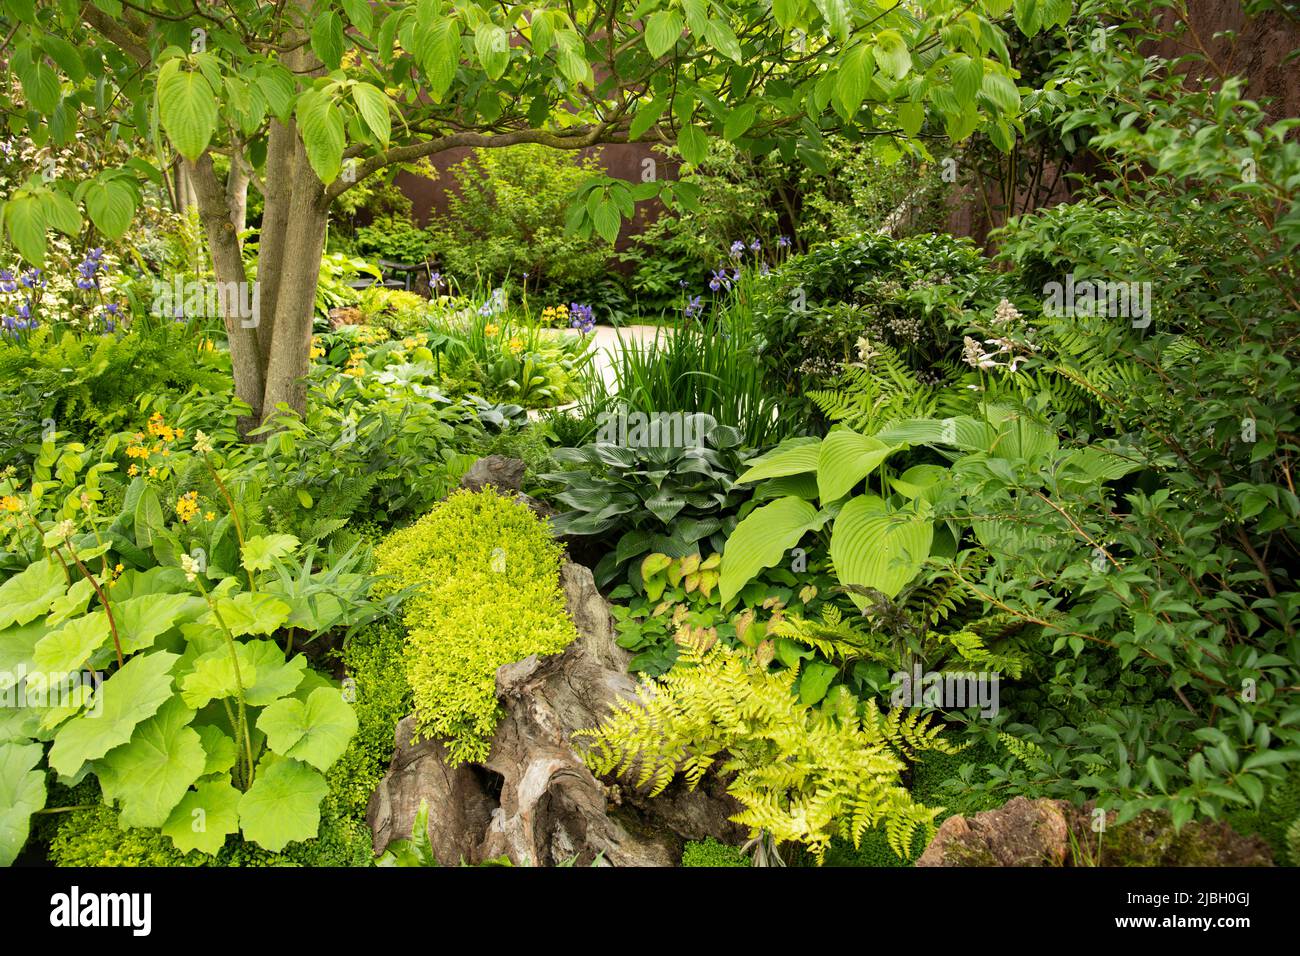 Selaginella kraussiana - Krauss’s spike moss in a tree stump, Hosta ‘Devon Green’ and Hosta ‘Royal Standard’ surrounded by multiple varieties of ferns Stock Photo